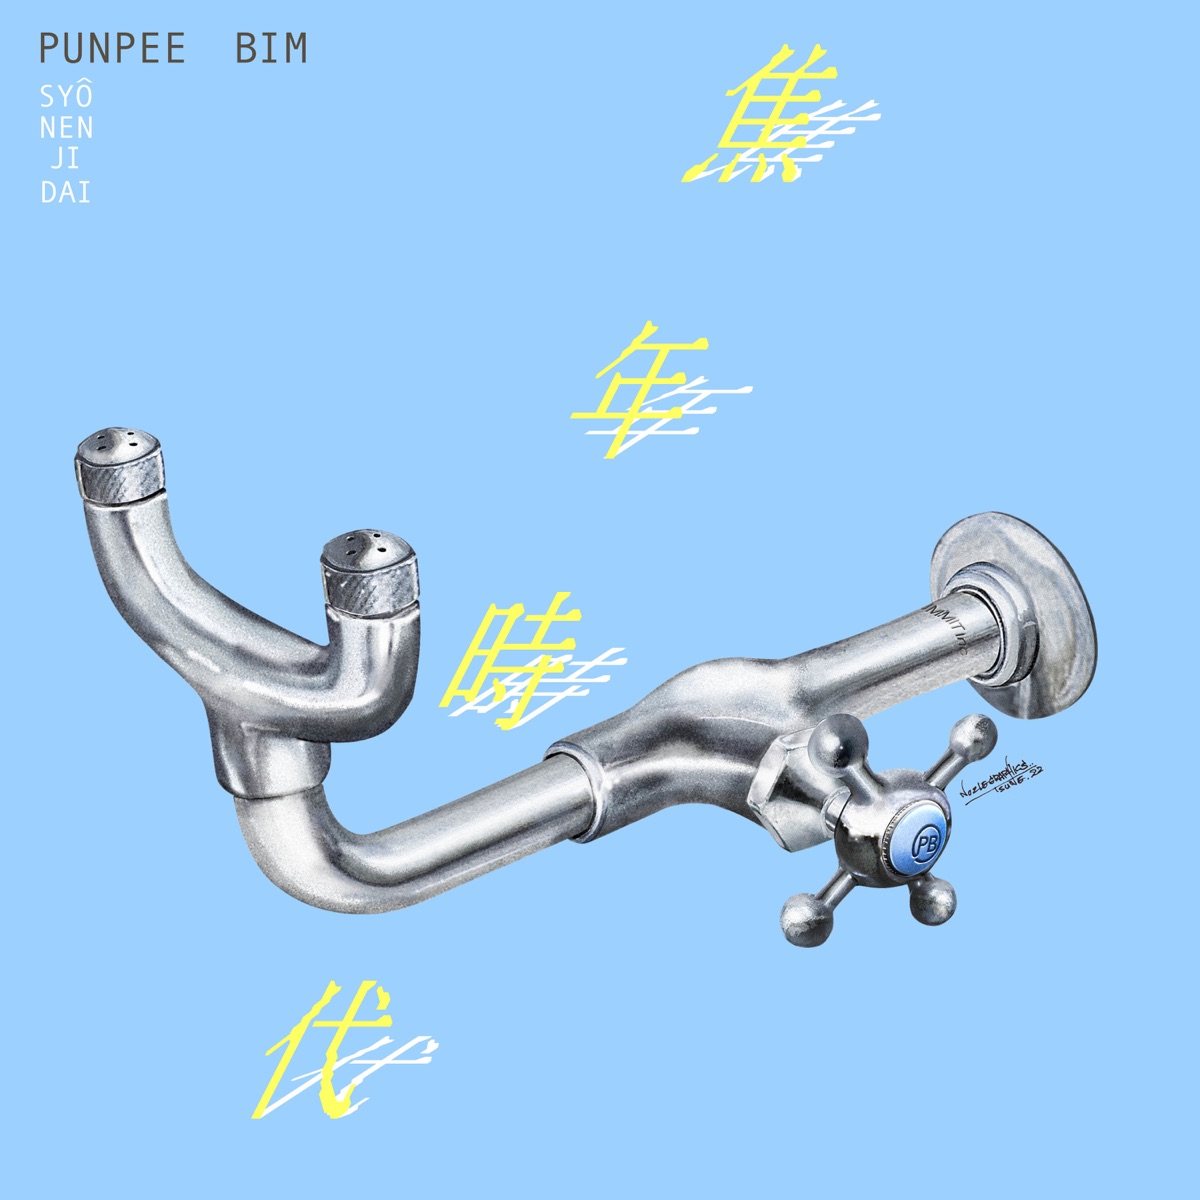 Cover art for『PUNPEE & BIM - Troche』from the release『Boyhood』